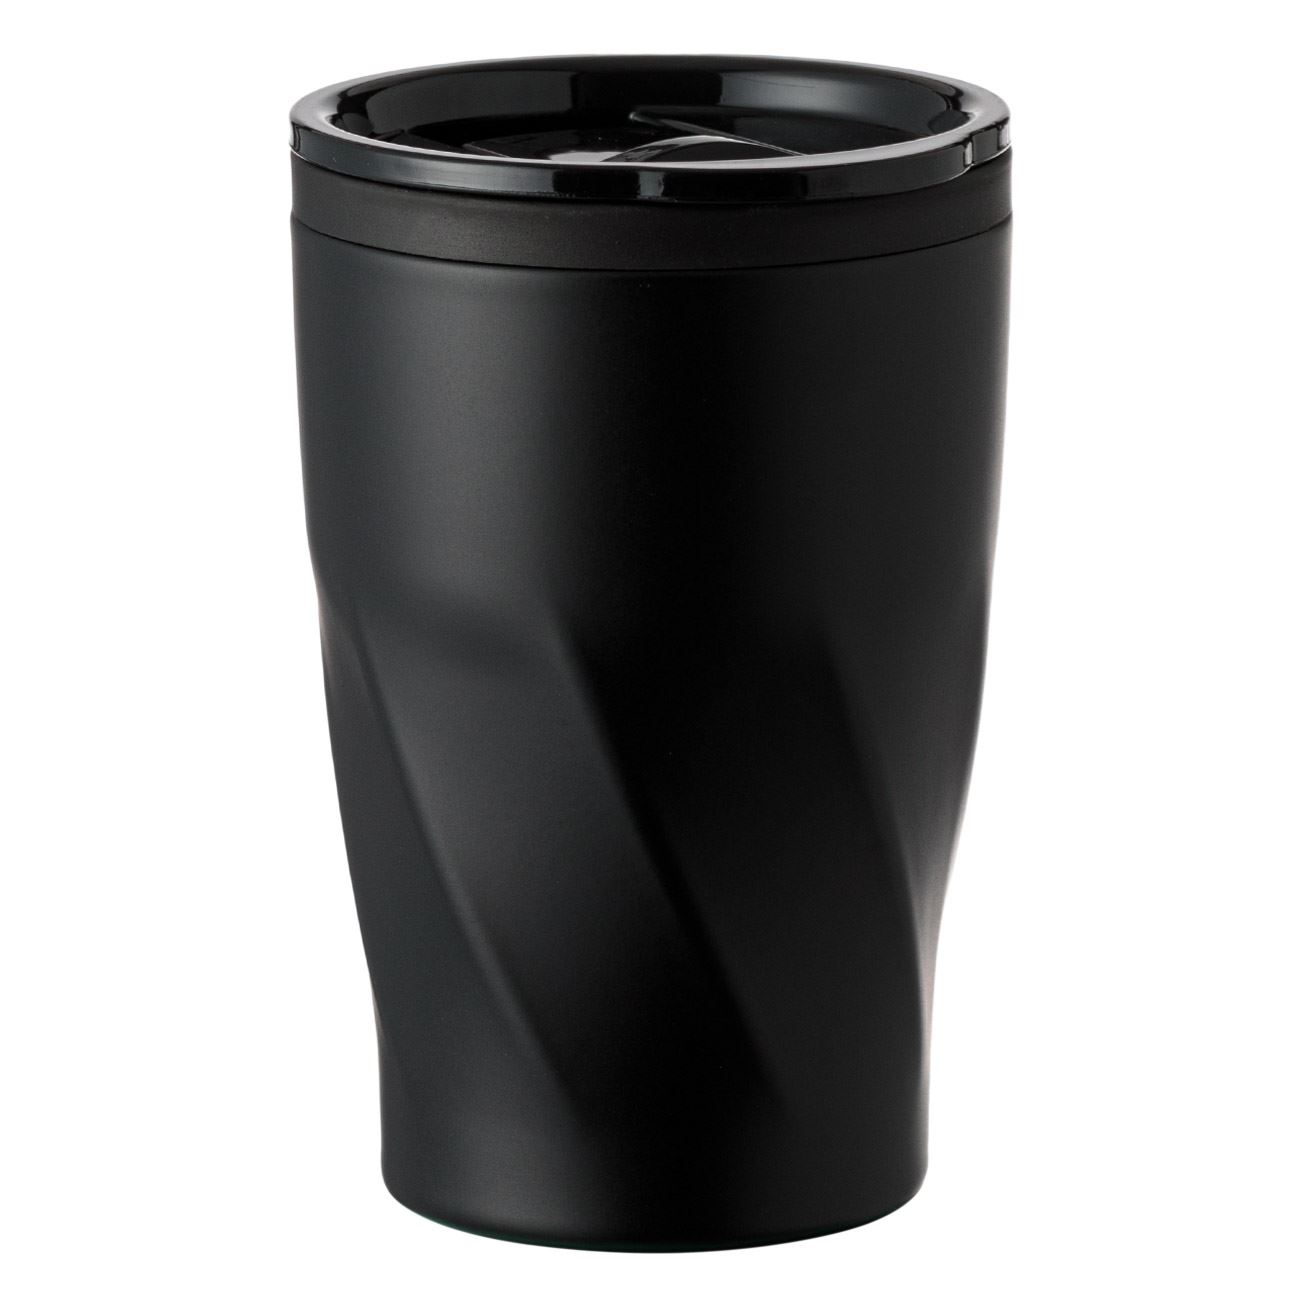 Plant Blank To Nine Ποτήρι Μεταφοράς Καφέ Μαύρο Μεταλλικό με Καπάκι & Στόμιο 500 ml < Ποτήρια  Μεταφοράς Καφέ Μεταλλικά με Πλαστική Επένδυση | Jumbo